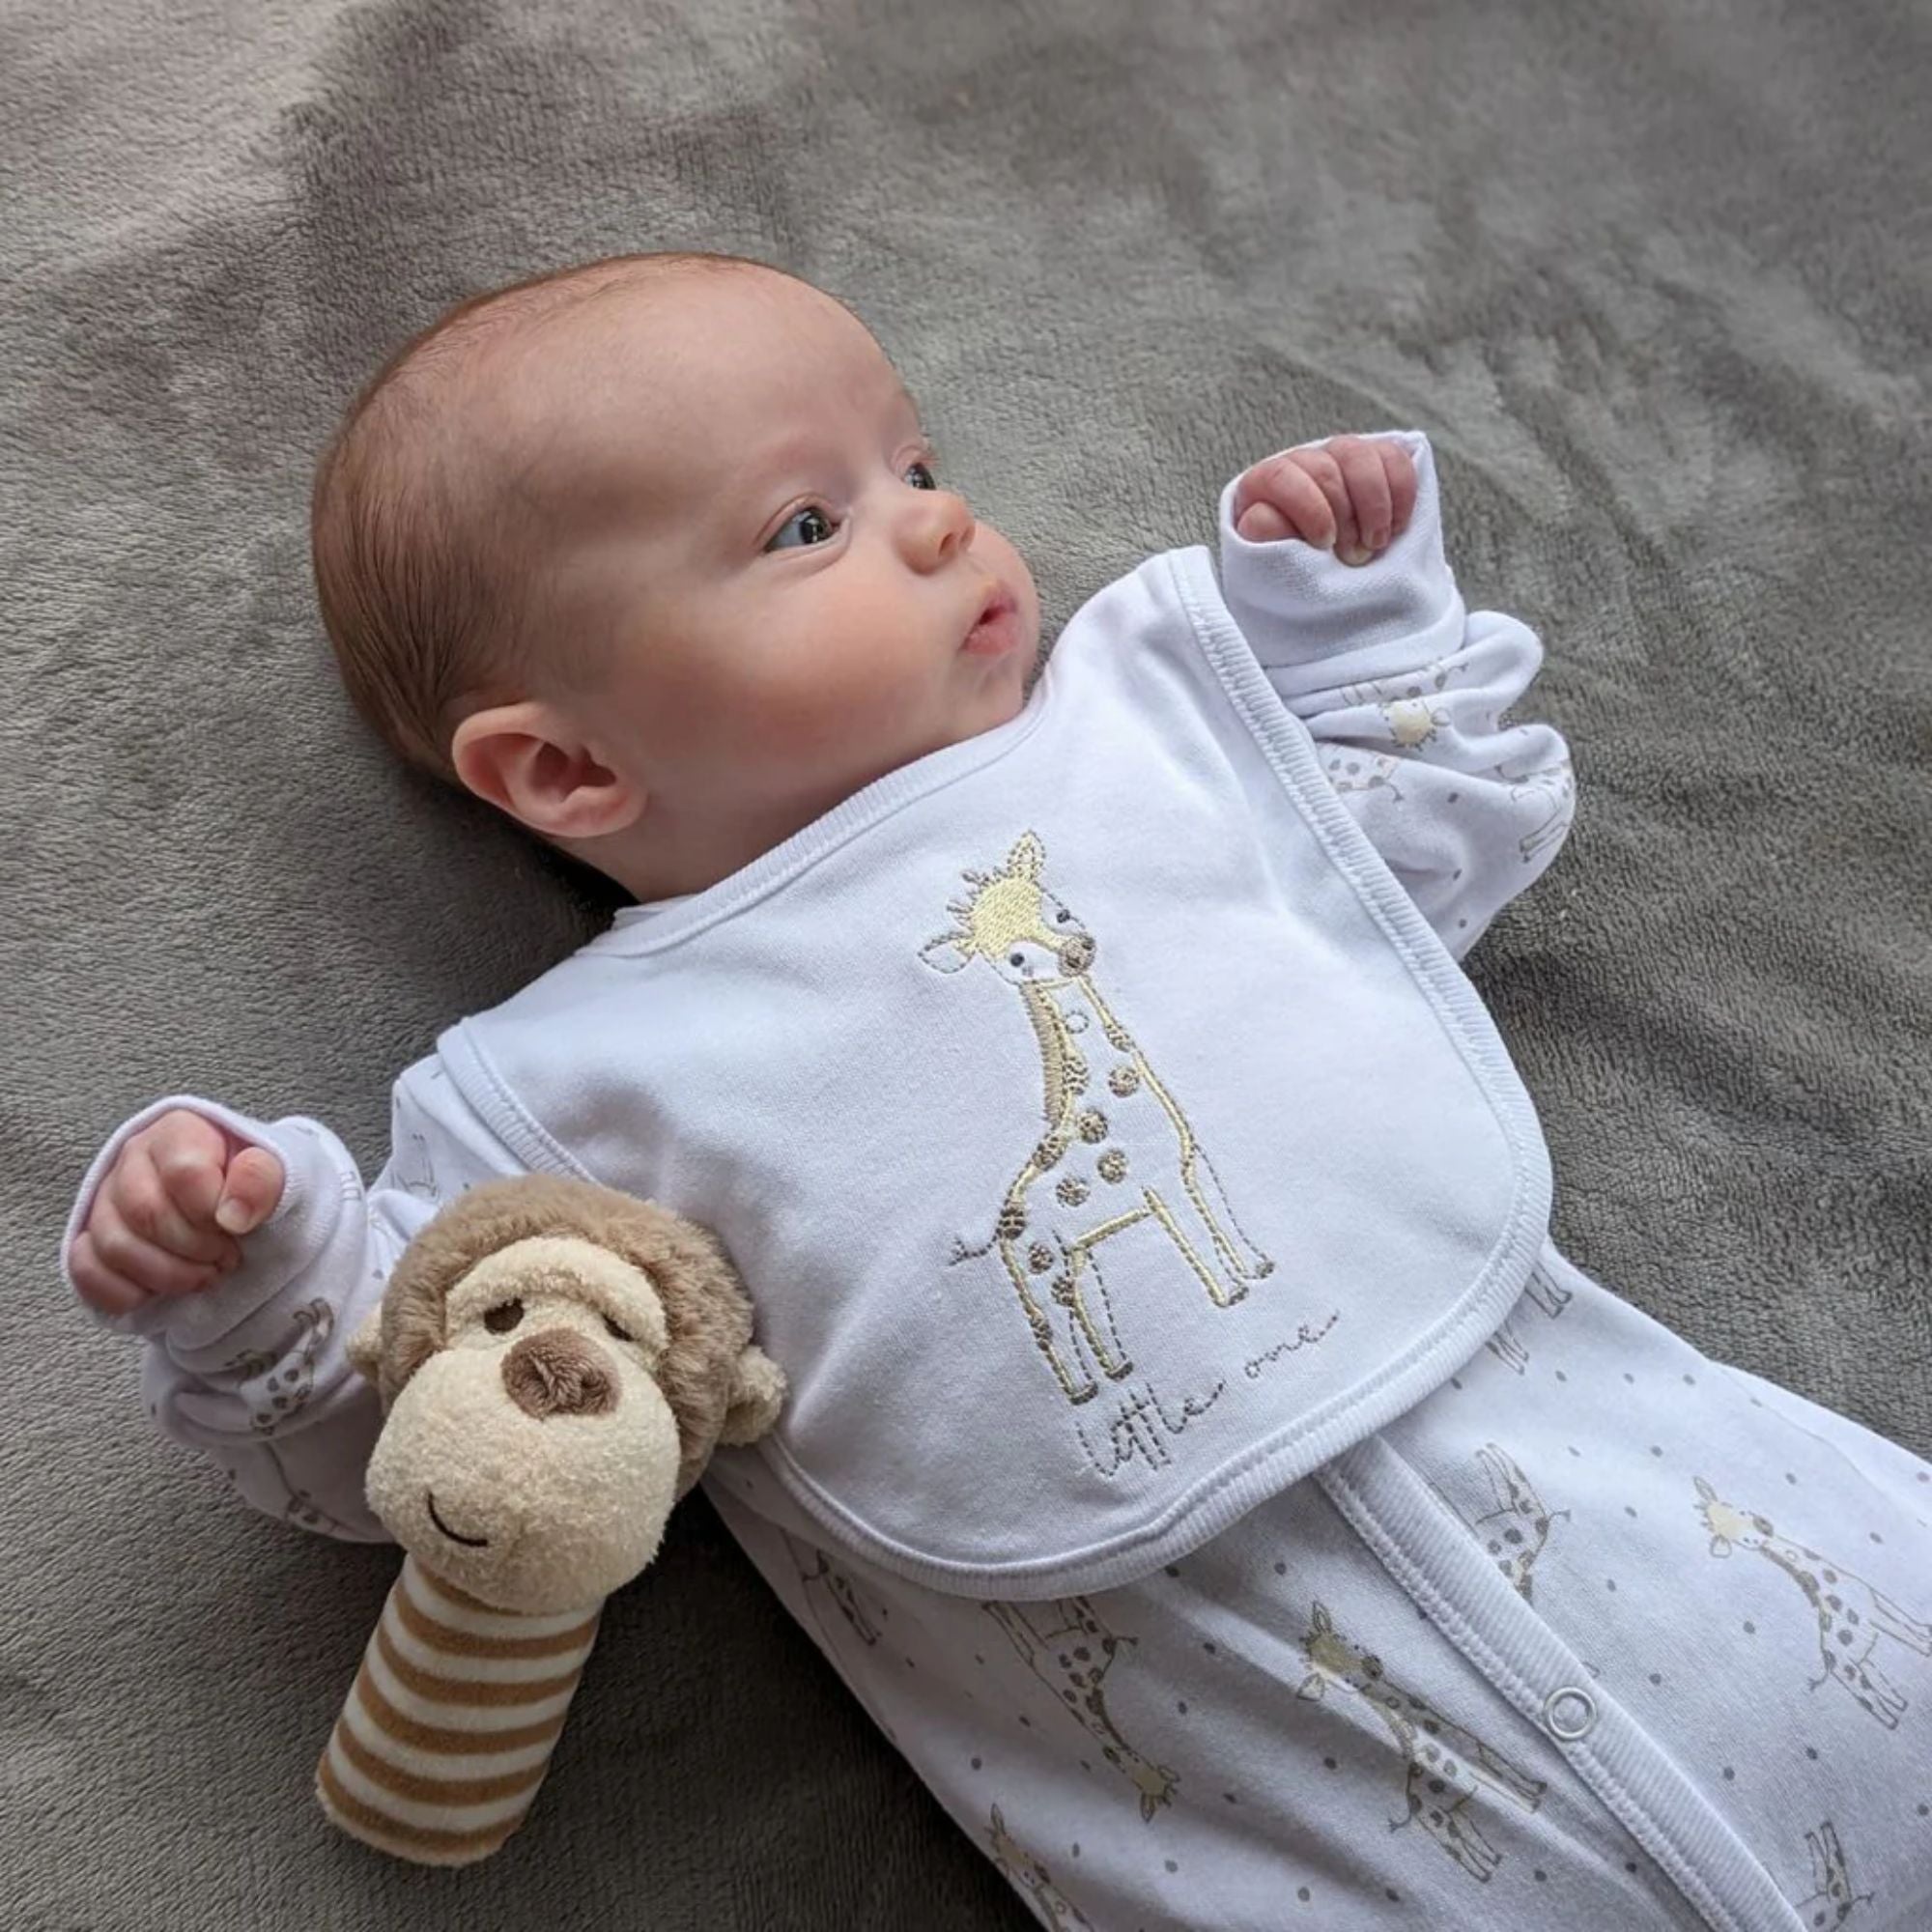 giraffe cotton baby clothing set on a newborn baby